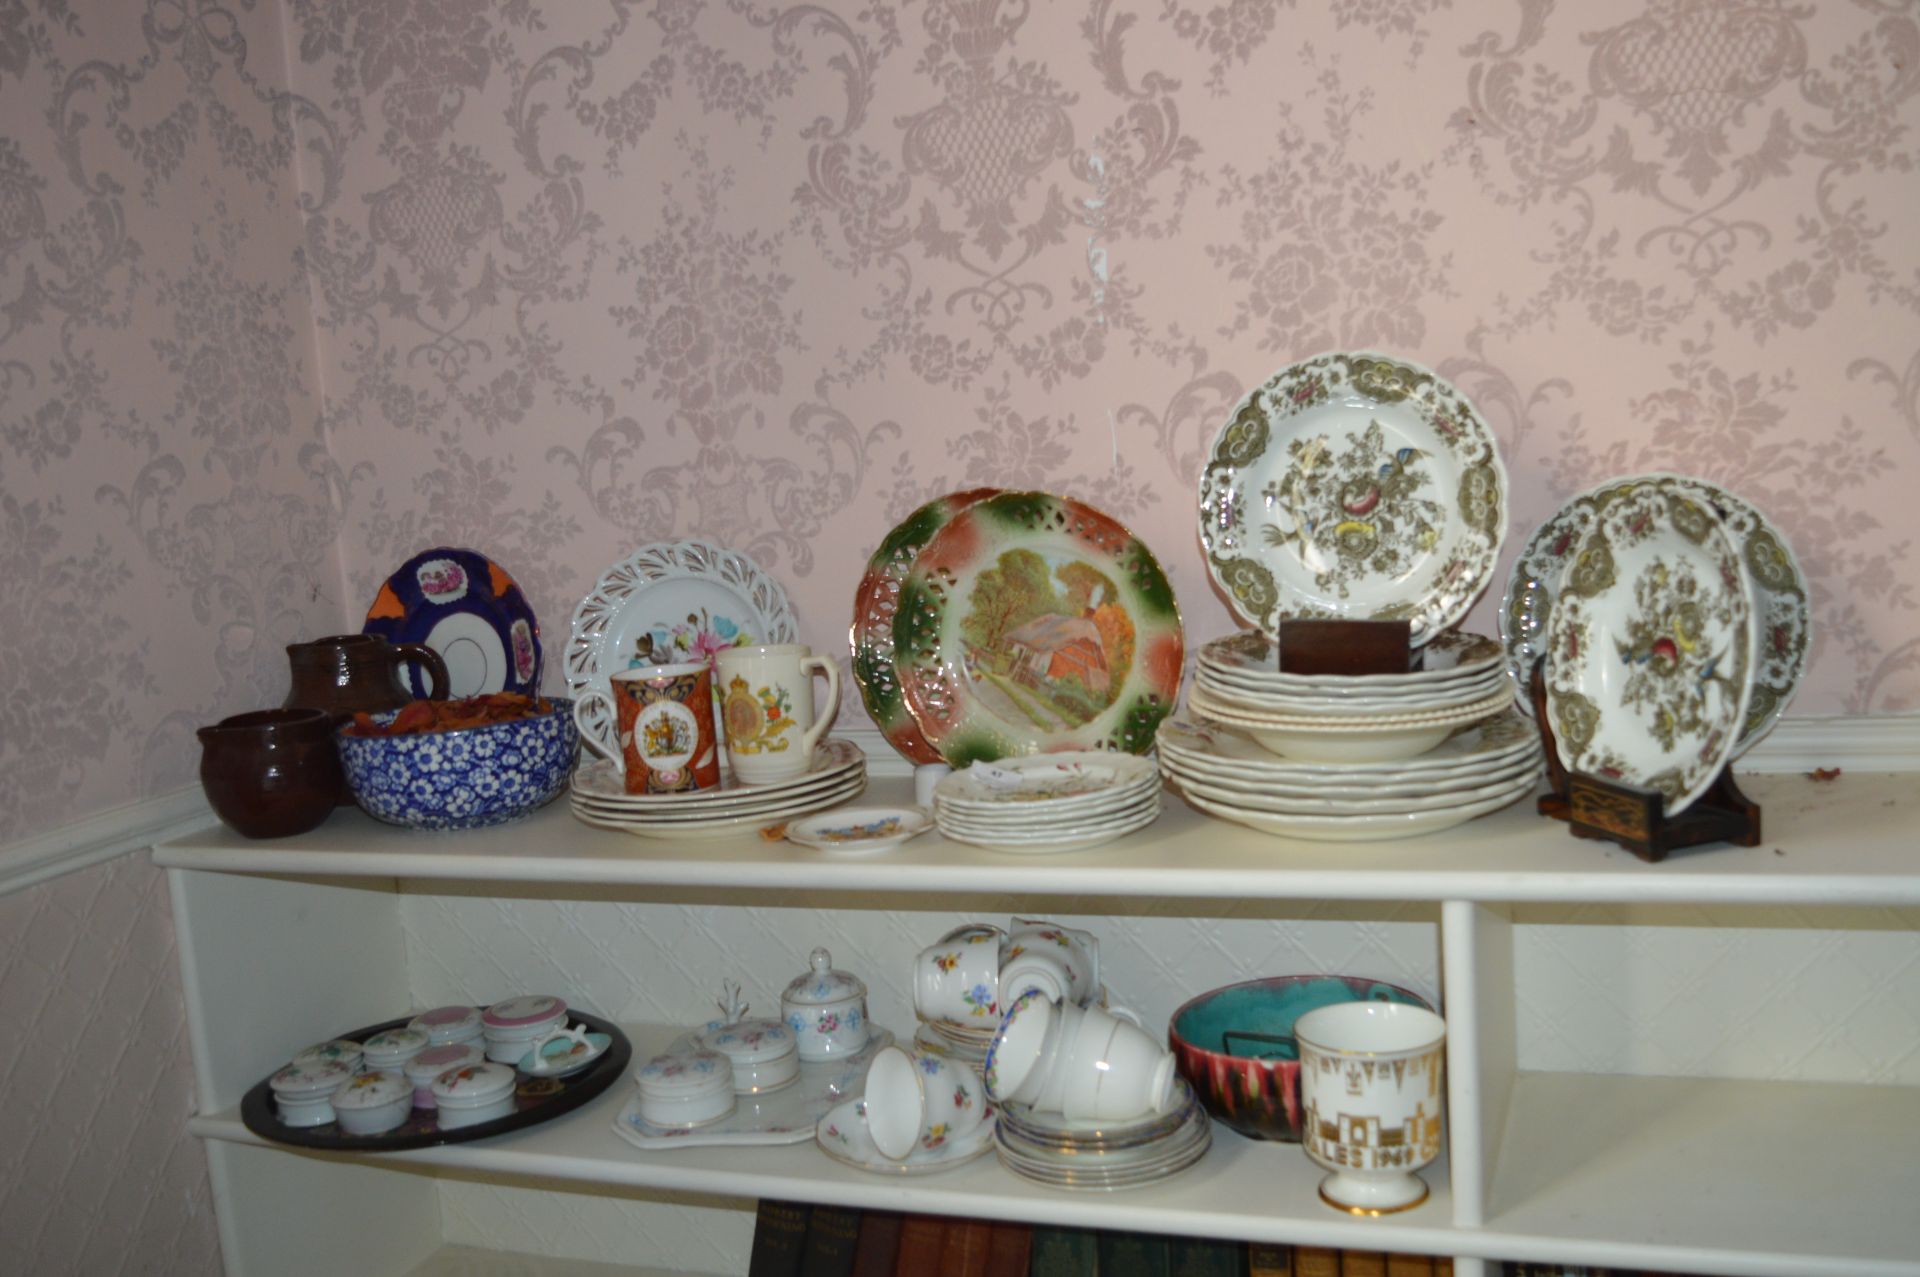 Quantity of China, Decorative Plates, Trinket Box, Jugs, etc.